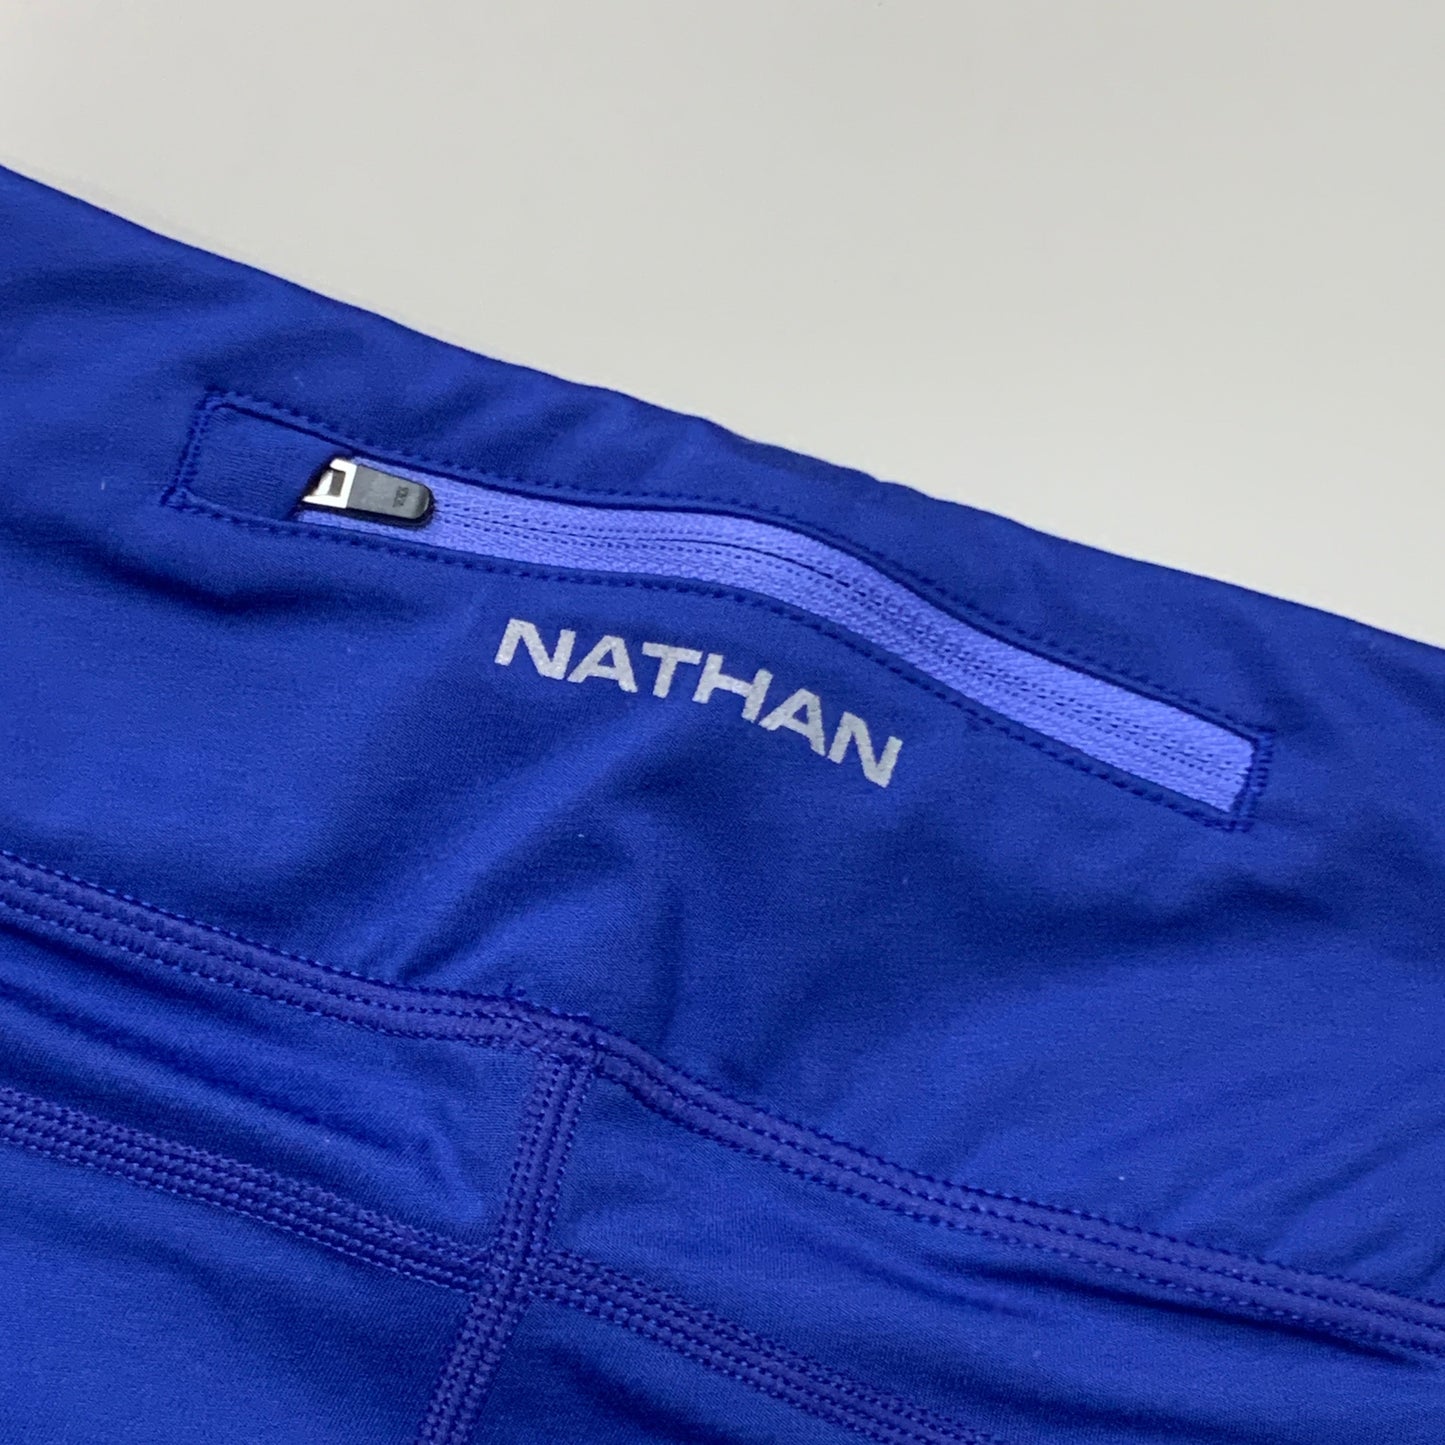 NATHAN Interval 6" Inseam Bike Short Women's Sodalite Blue Size S NS51520-60247-S